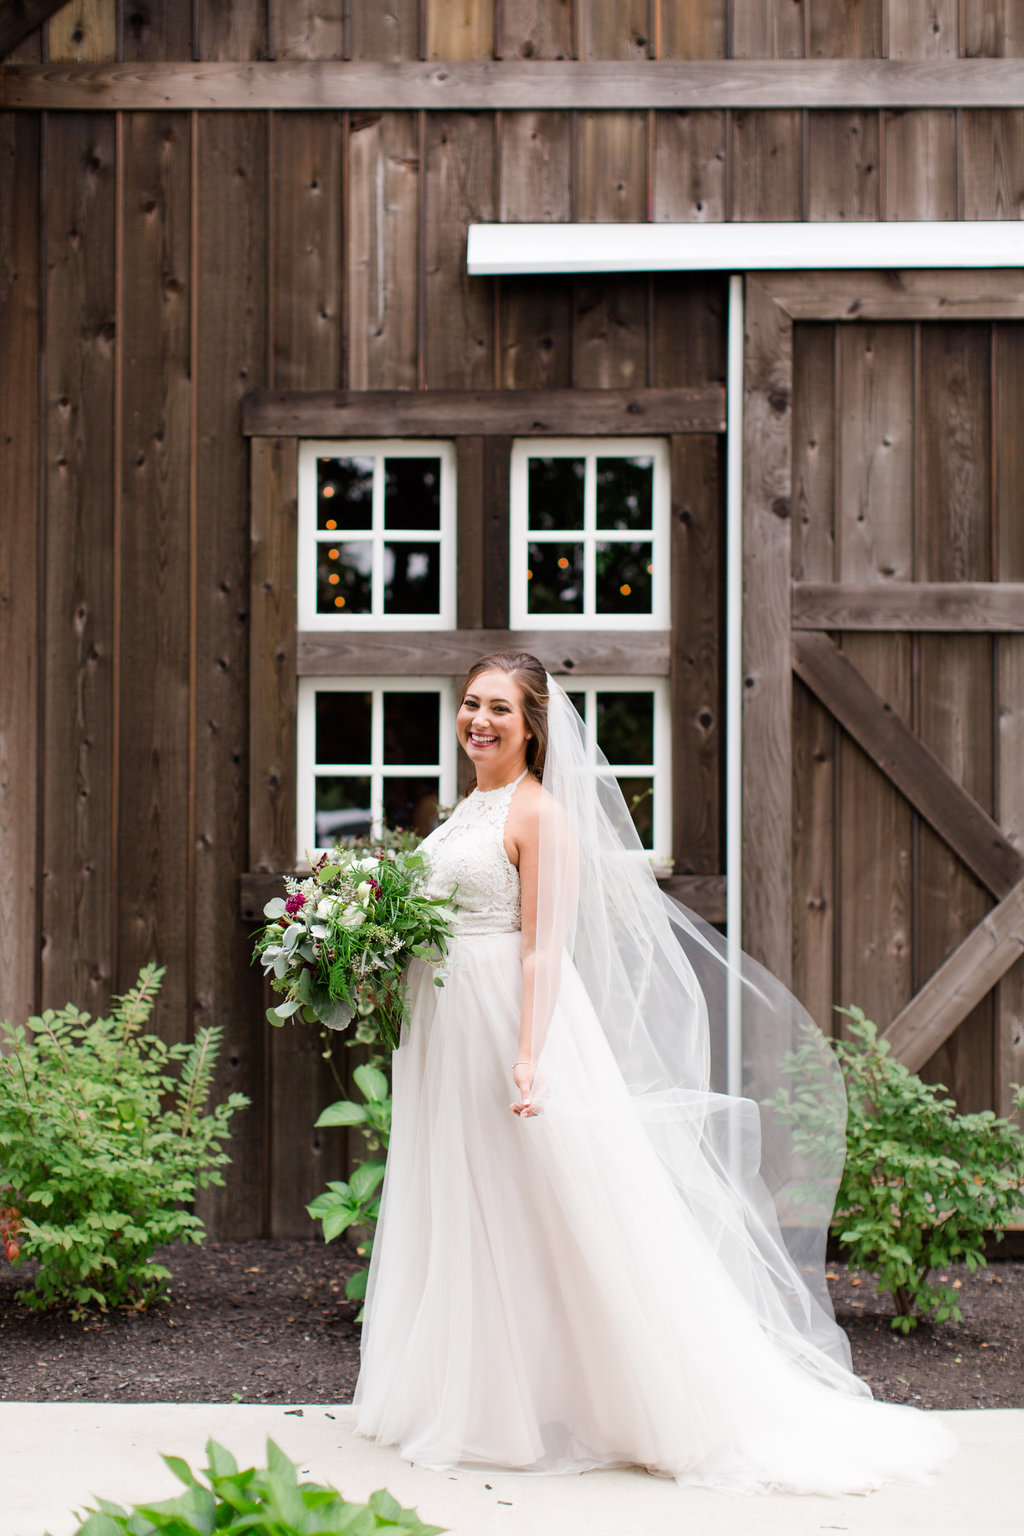 The Barn at Kennedy Farm Wedding - Lizton, Indiana Wedding Venue - Danielle Harris Photography -- Wedding Blog - The Overwhelmed Bride